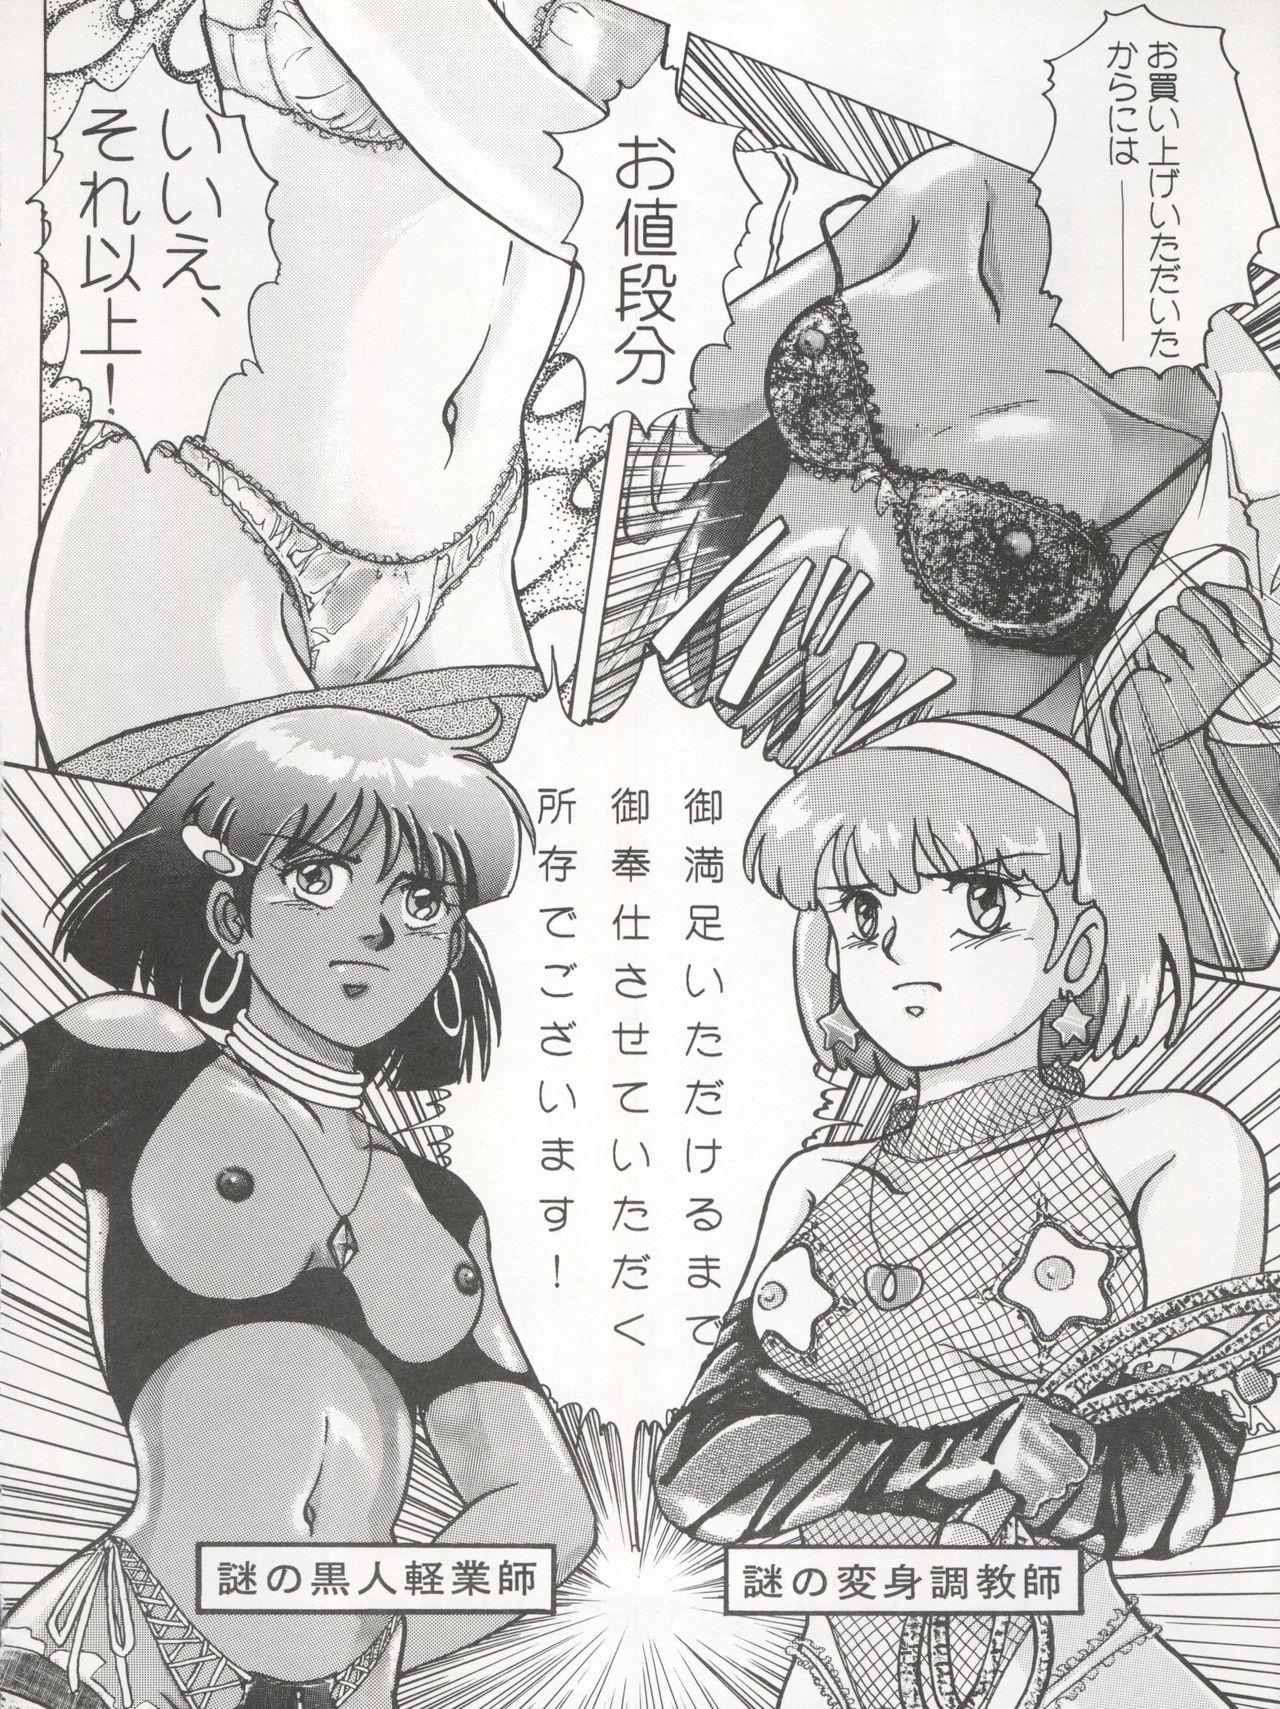 Nerd 逮捕されちゃうぞ - Fushigi no umi no nadia Youre under arrest Minky momo 3x3 eyes Massages - Page 4